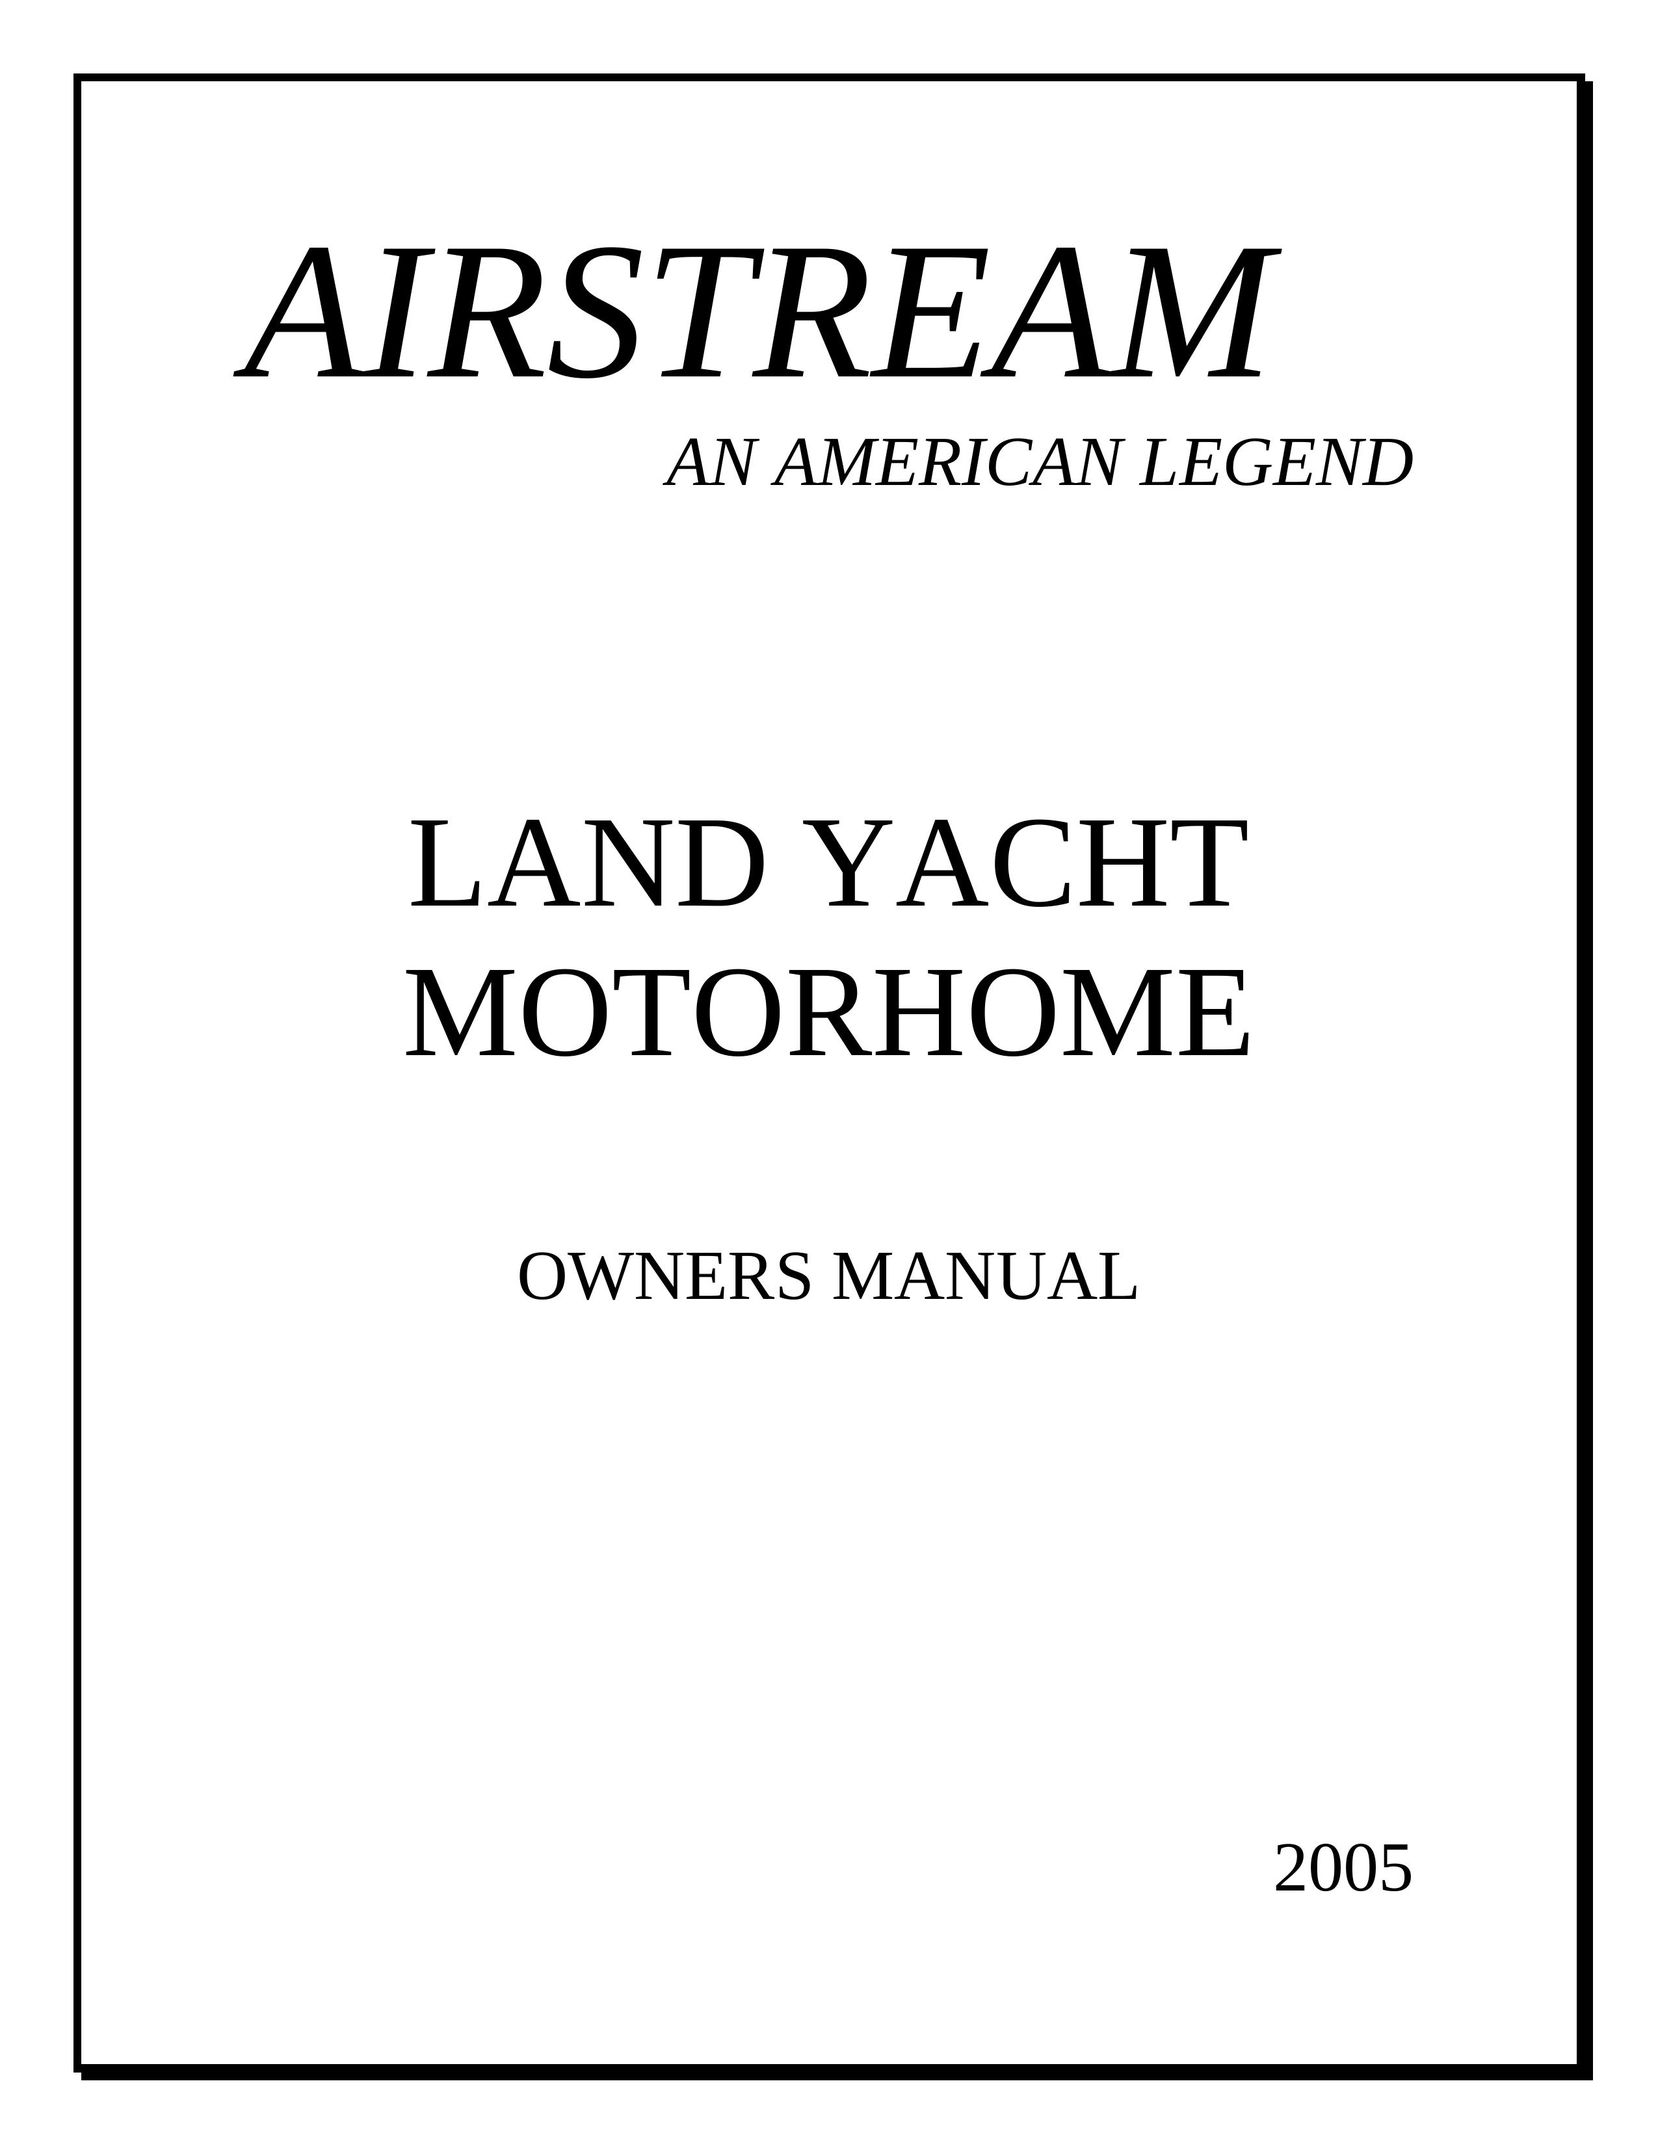 Airstream LAND YACHT MOTORHOME Dehumidifier User Manual